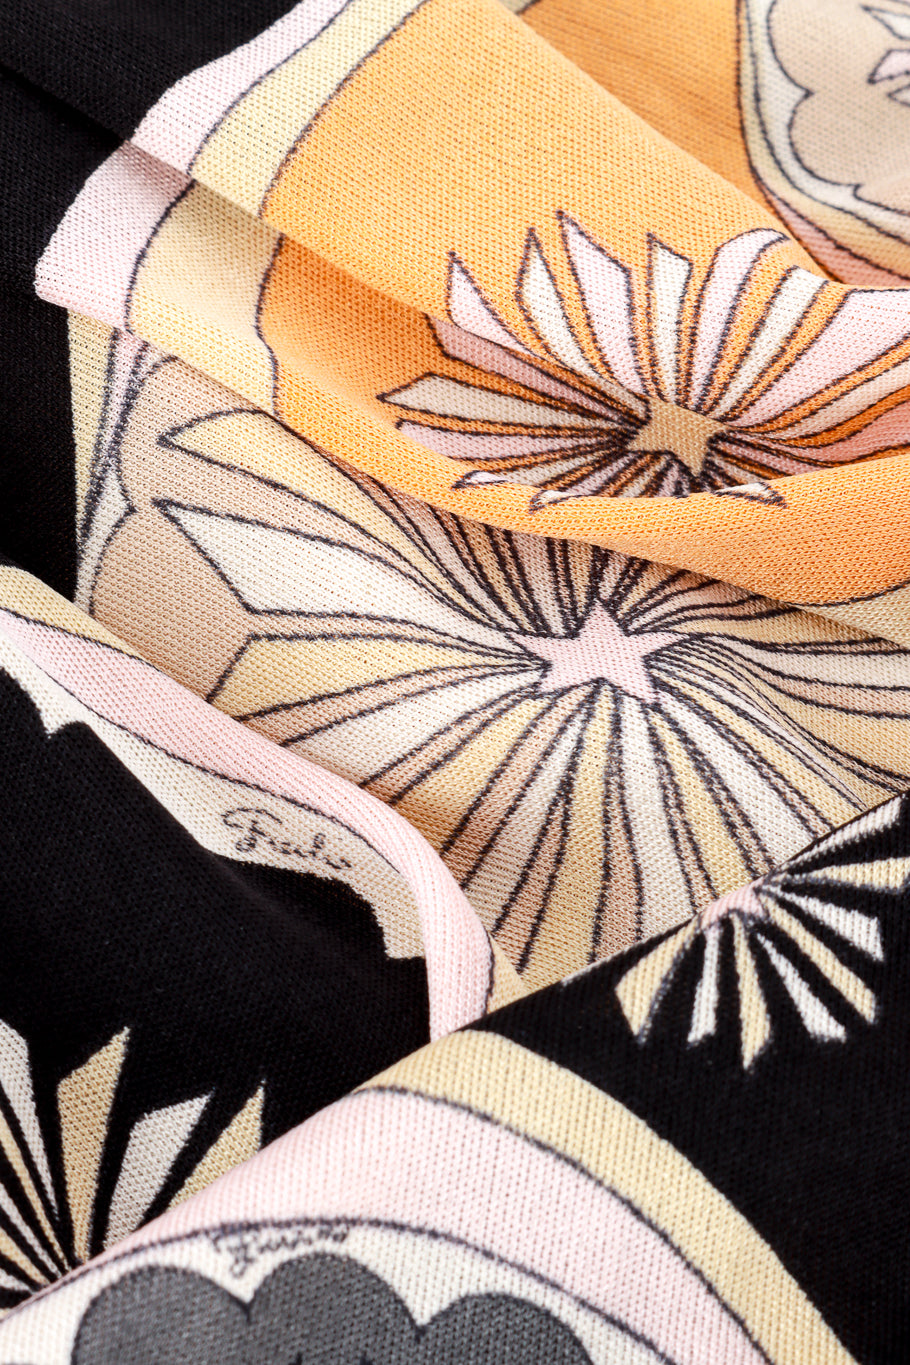 Geo Floral Print Dress by Pucci fabric detail @RECESS LA